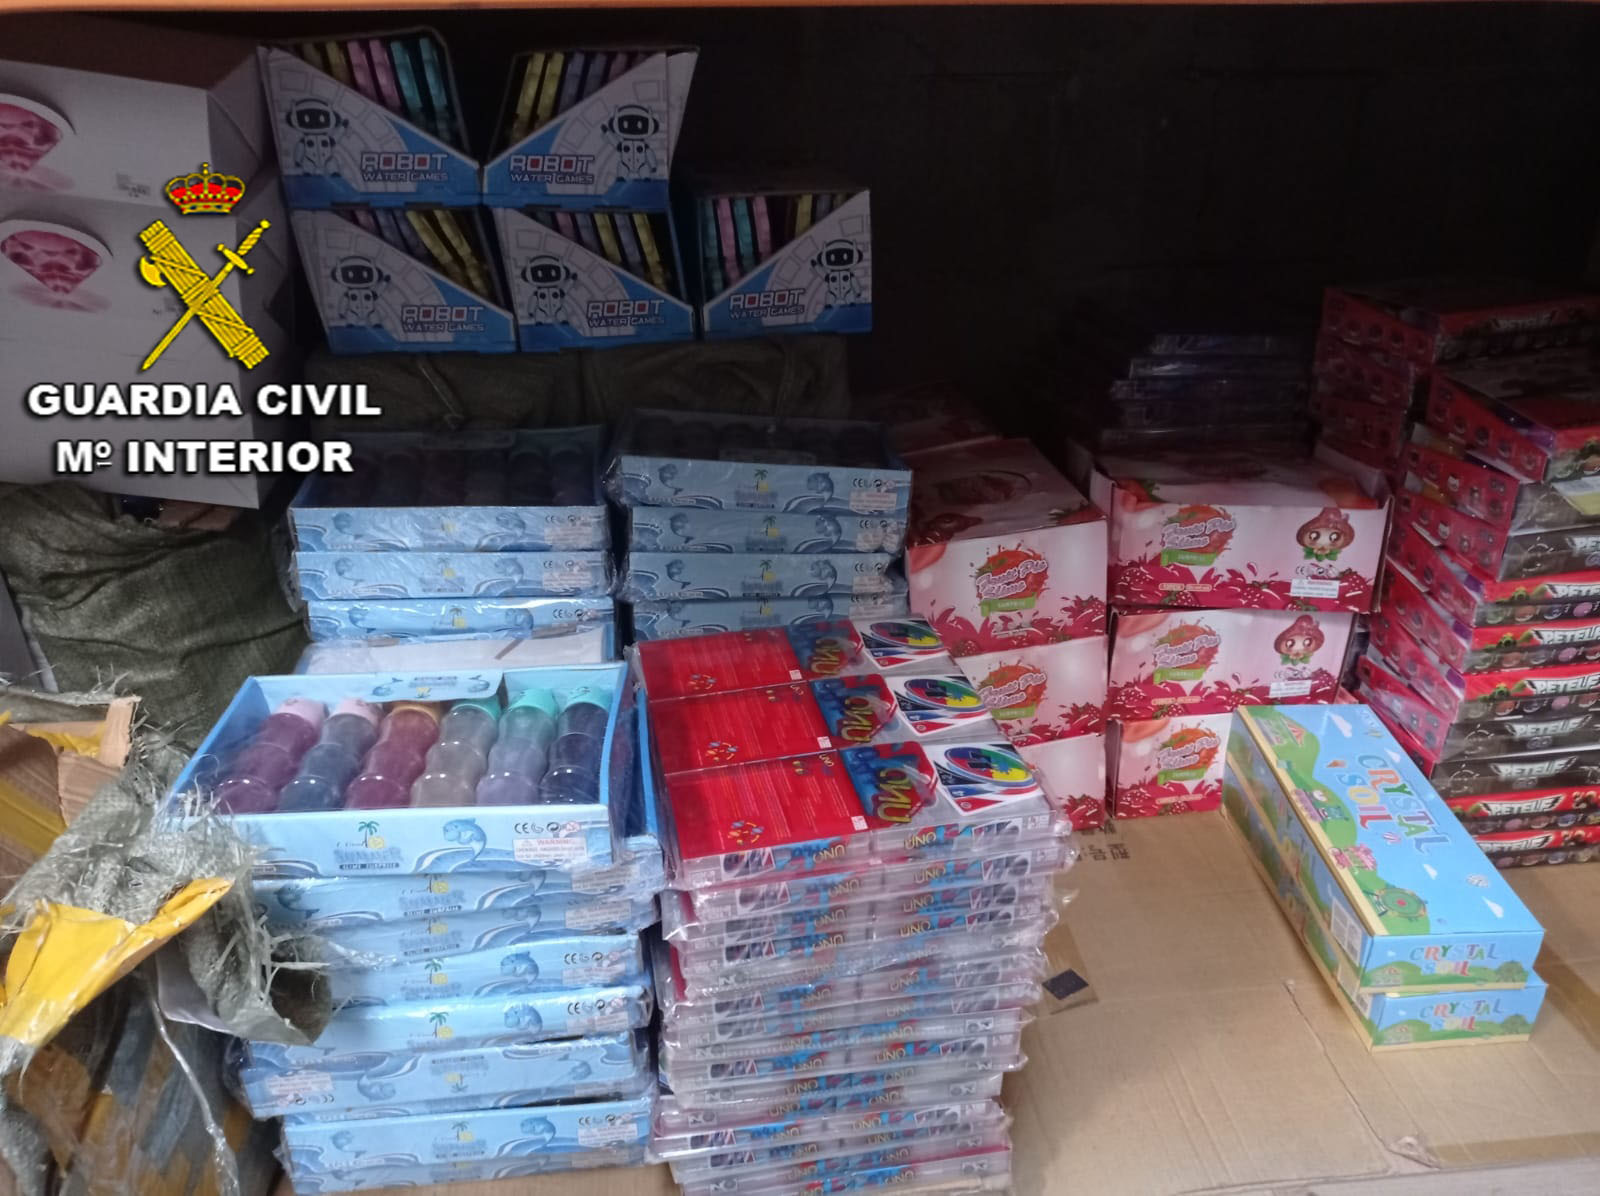 La Guardia Civil retira de la venta 1.500 juguetes por no reunir condiciones de seguridad